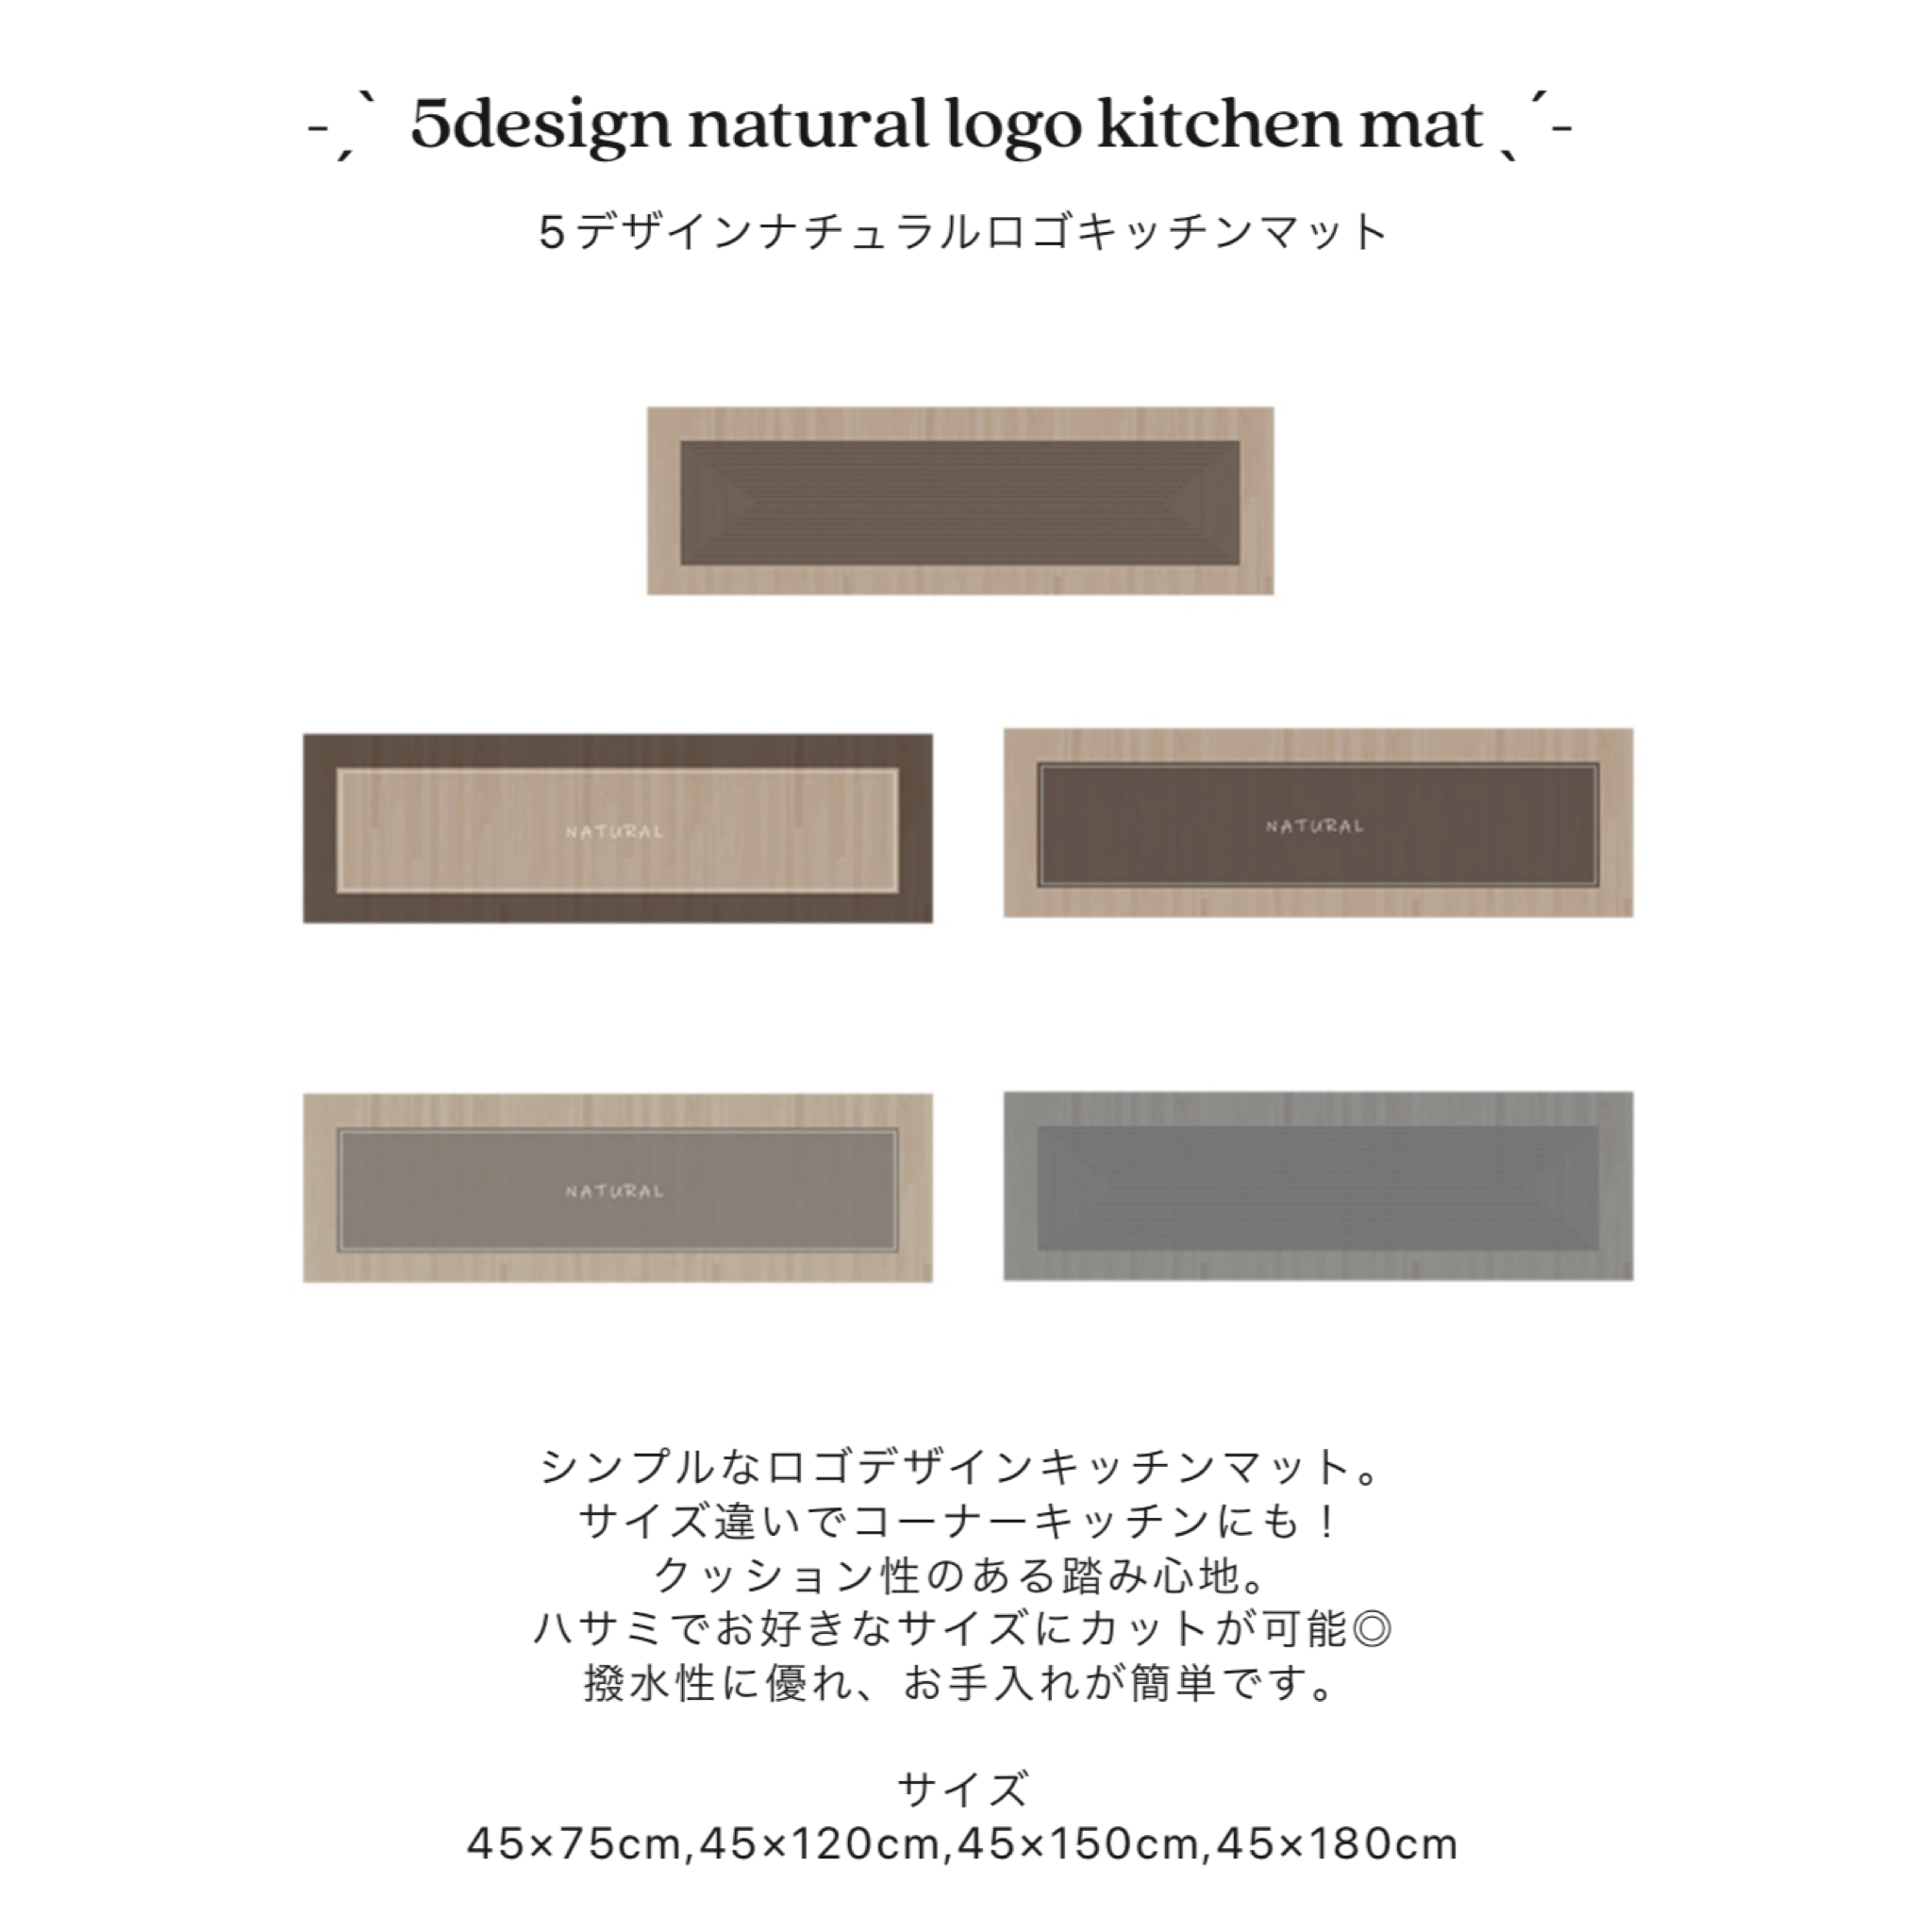 5design natural logo kitchen mat